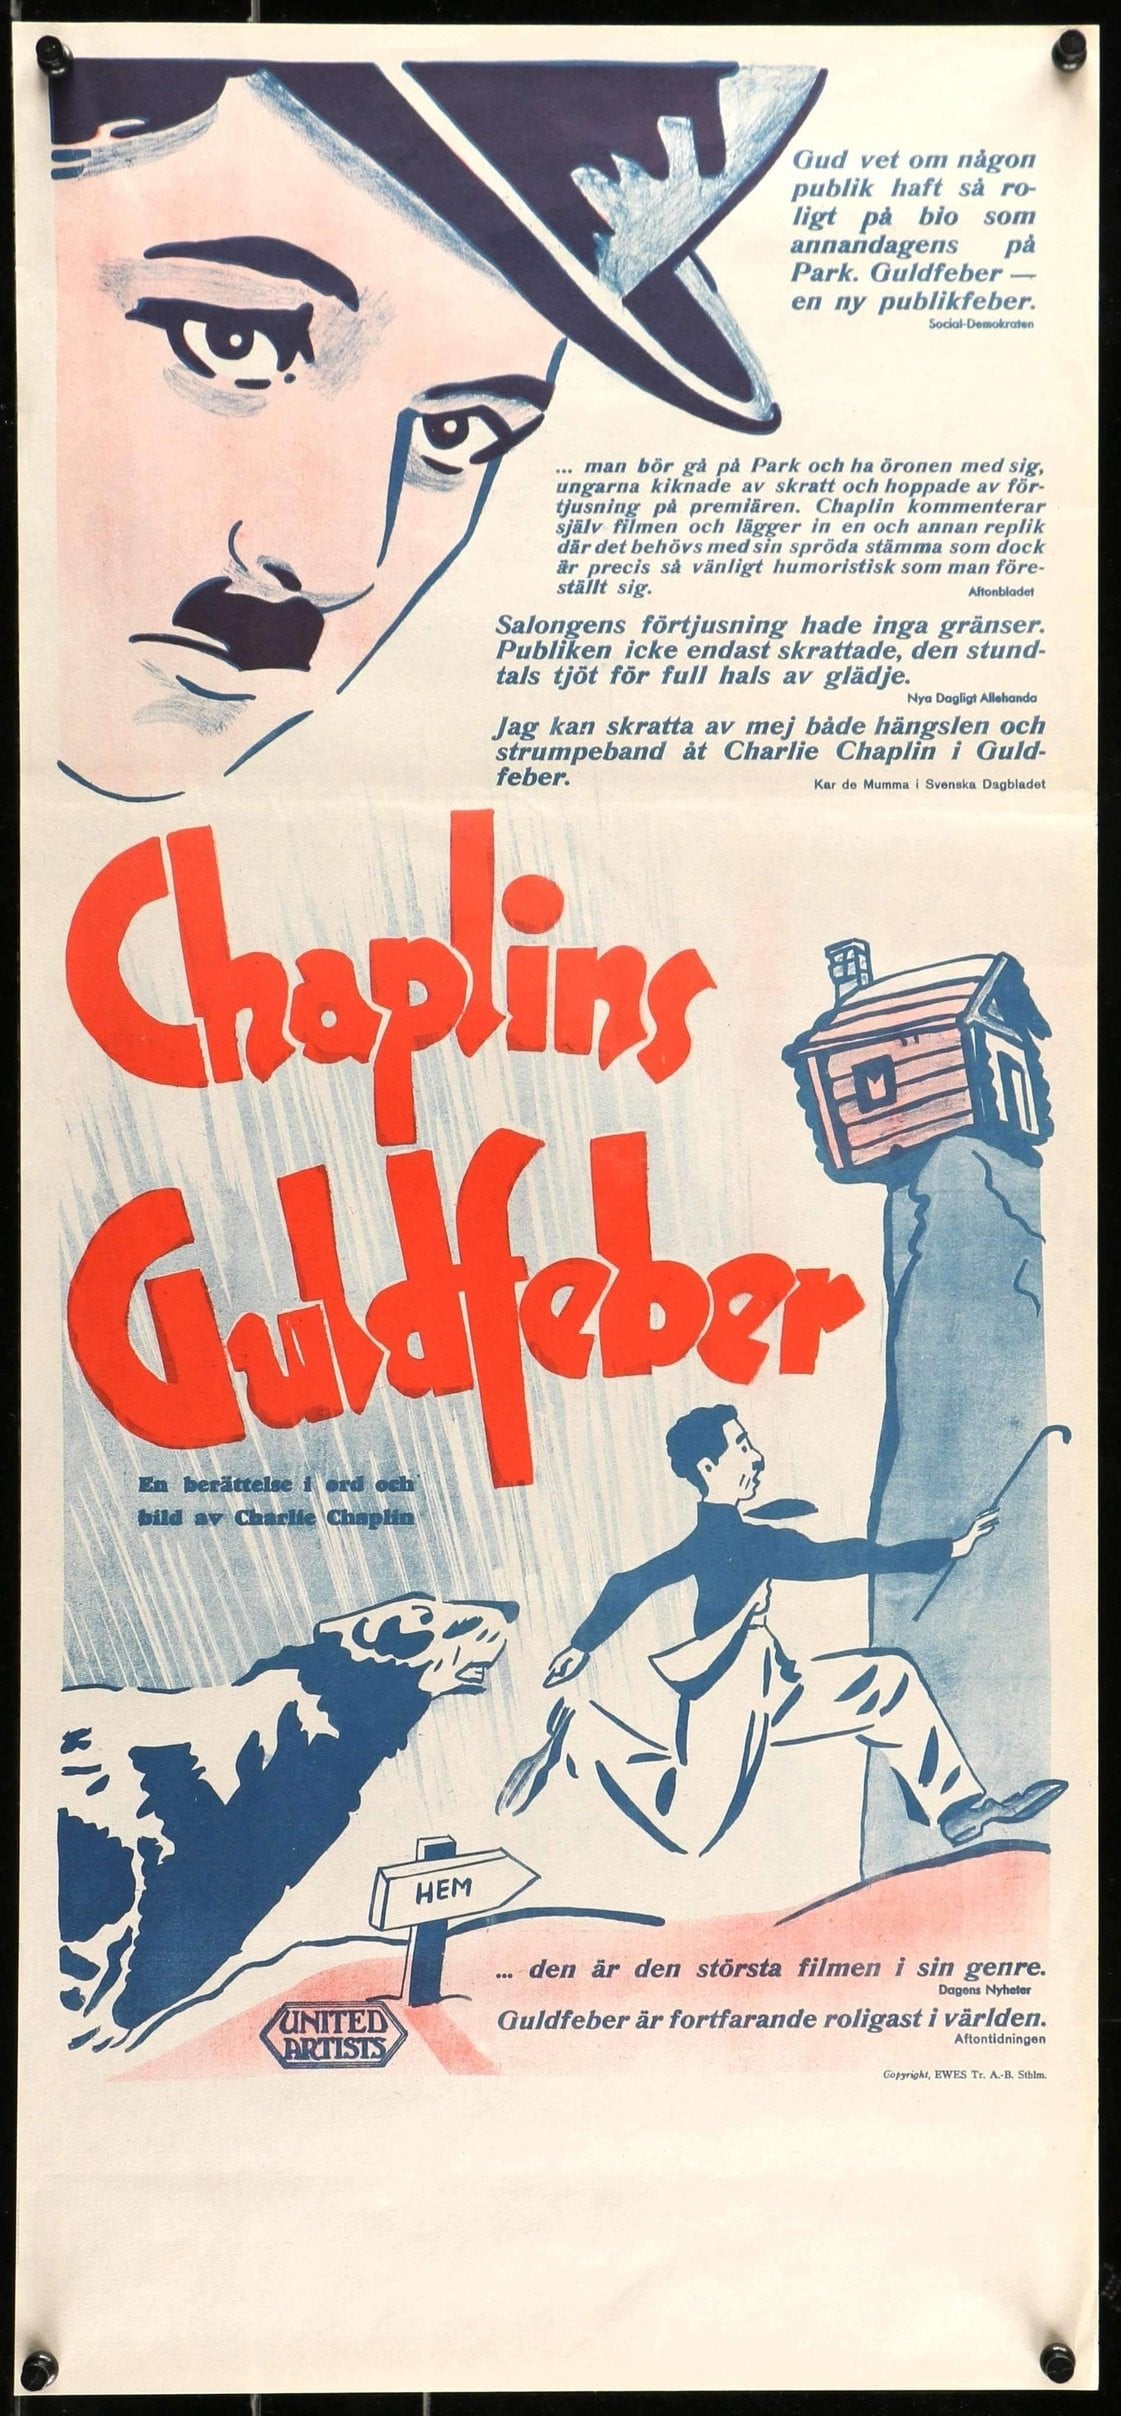 charlie chaplin gold rush poster